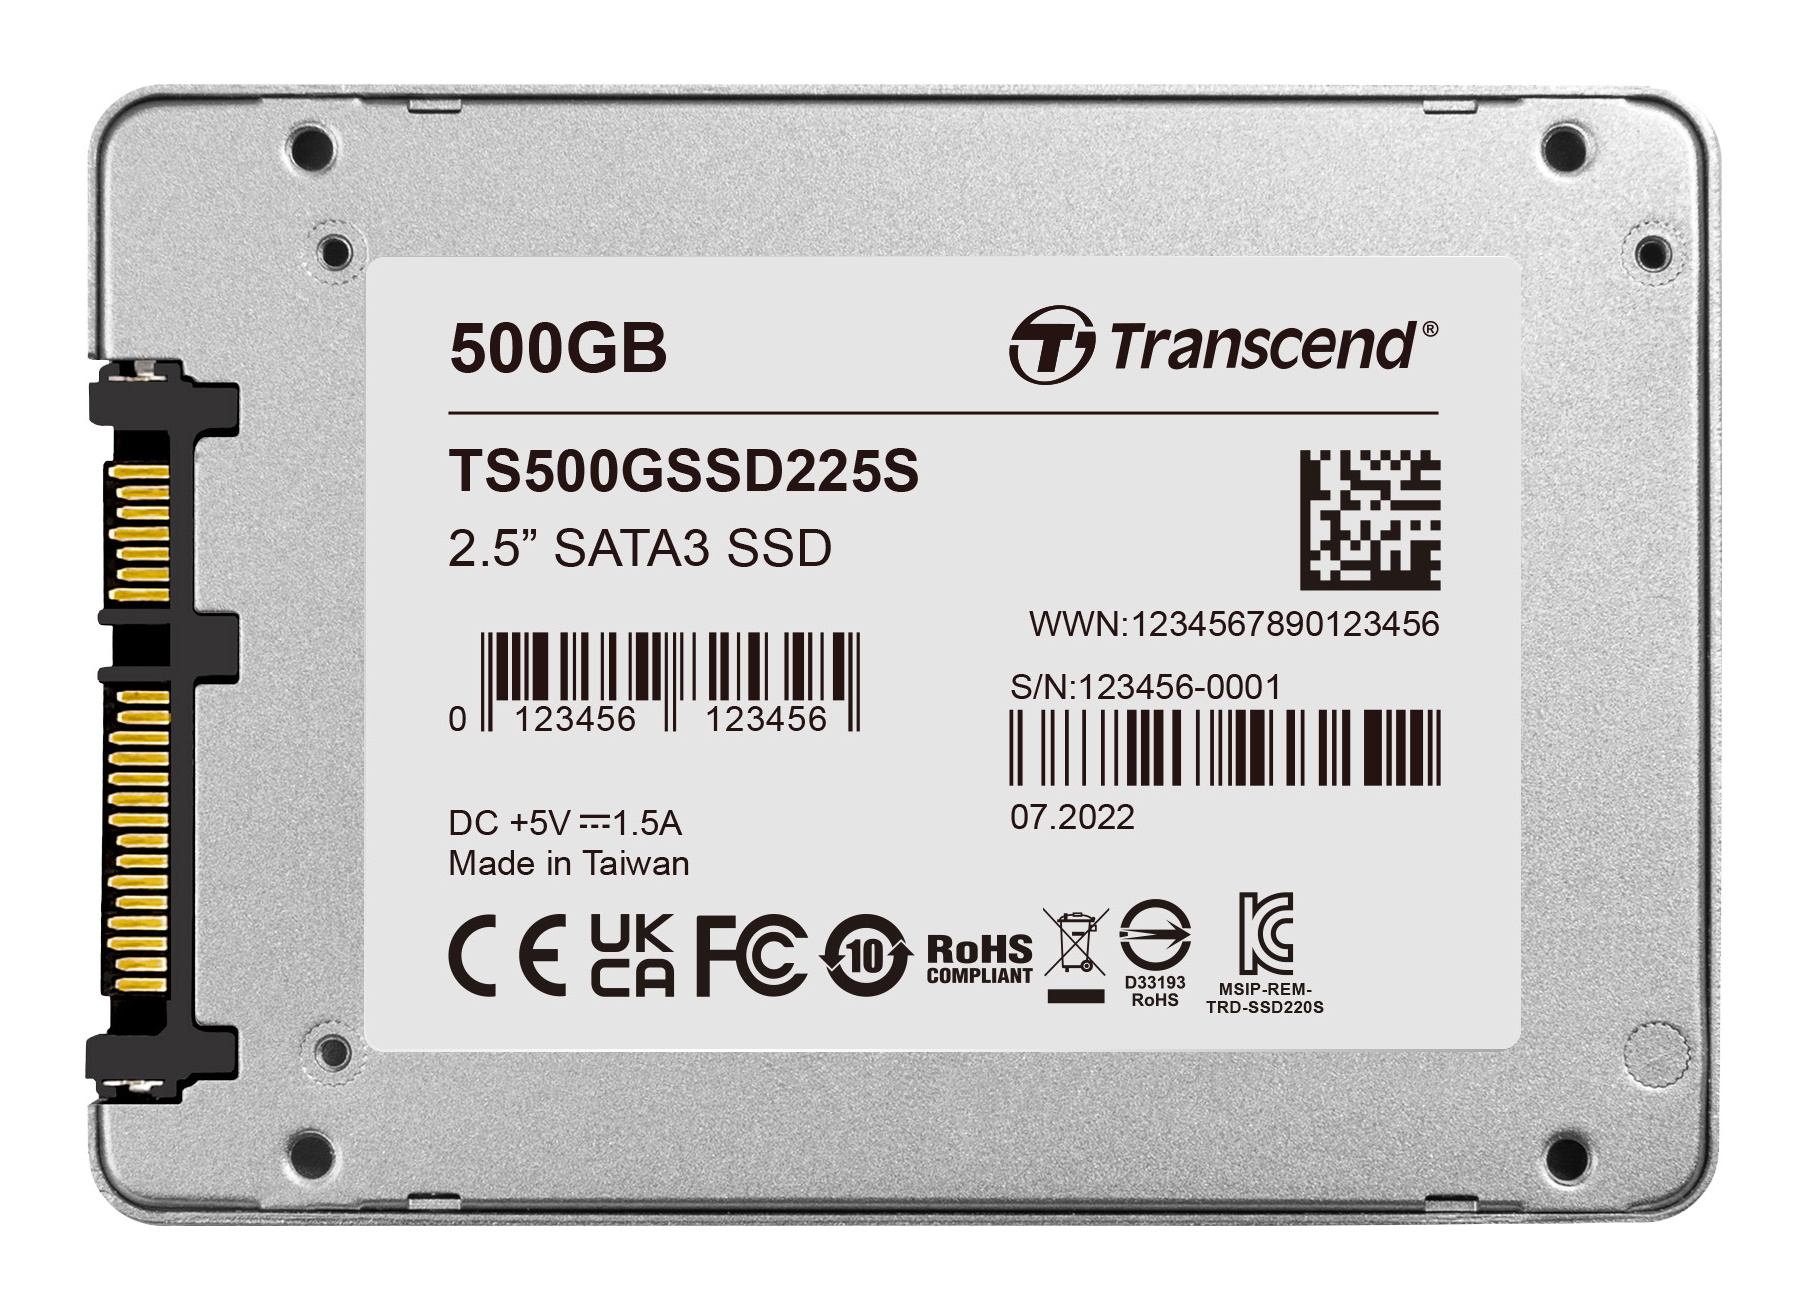 Transcend SSD225S 250GB Internal SSD Price in BD